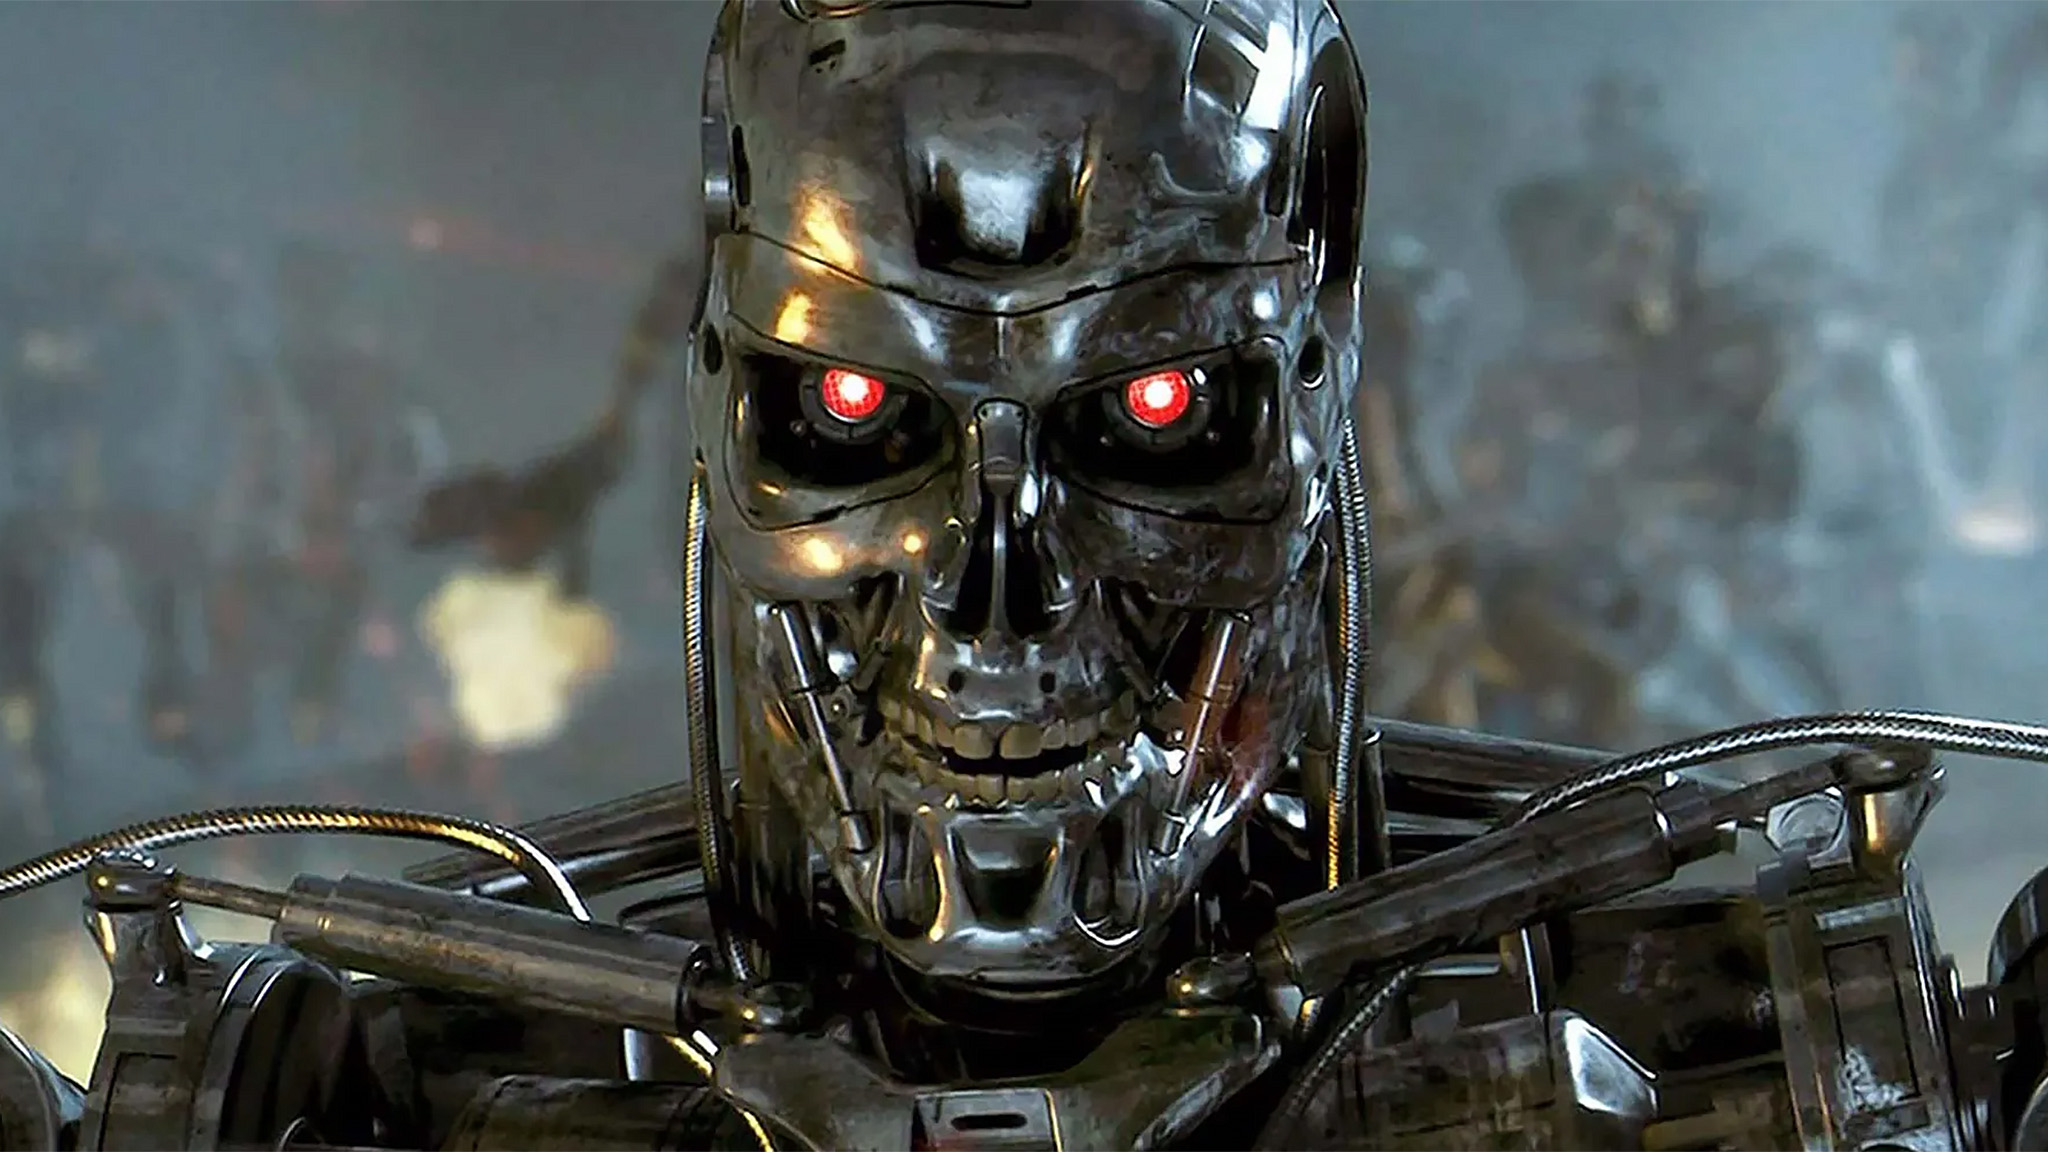 An image of a Terminator robot